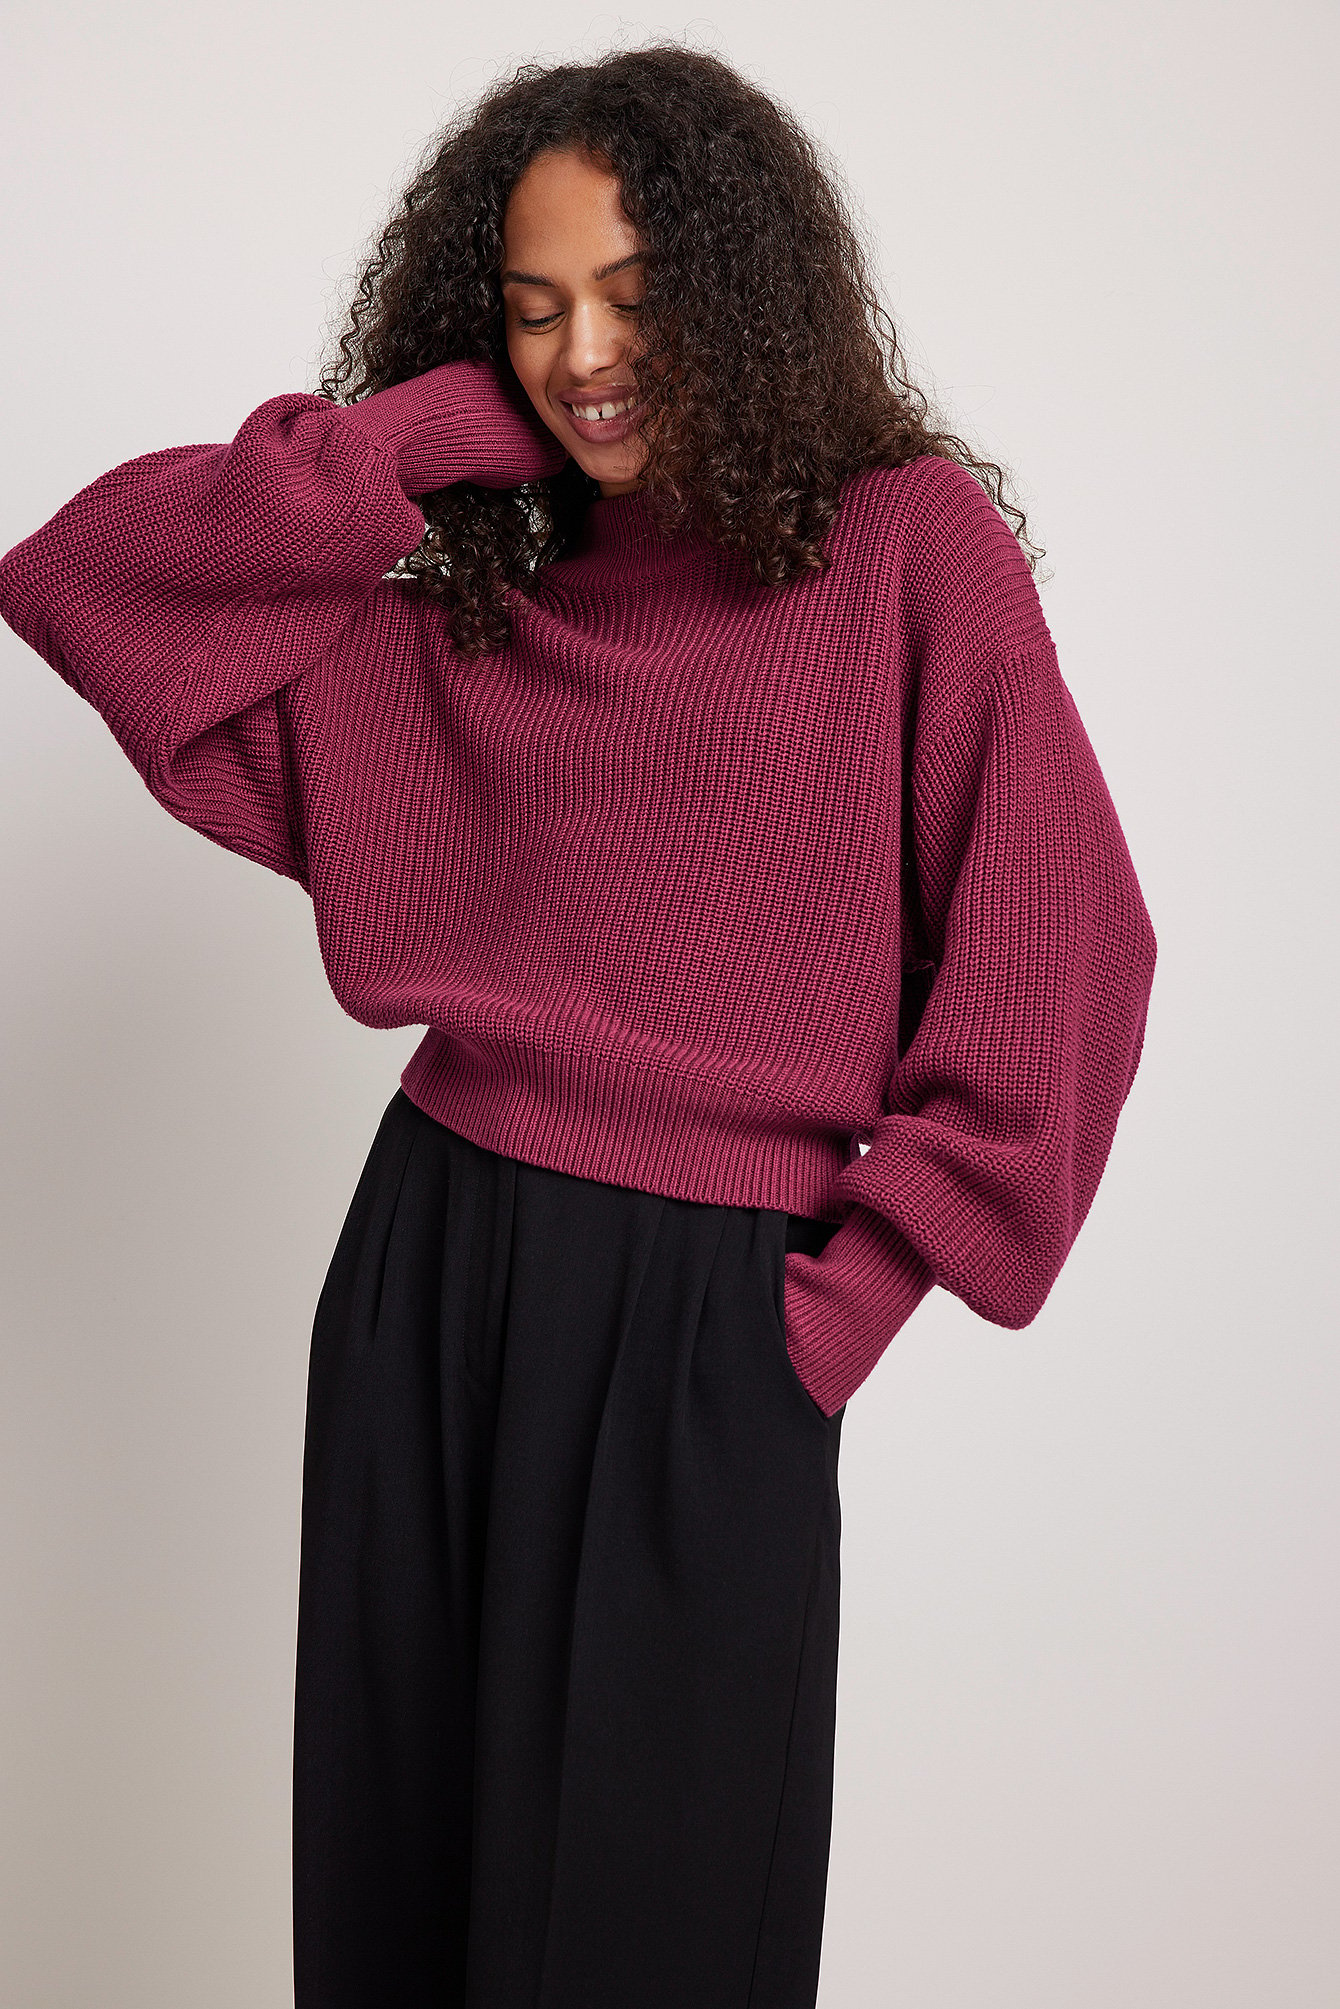 Kleding Gender-neutrale kleding volwassenen Sweaters katoenen trui Trui voor vrouwen oversized trui herfst trui chunky gebreide trui 